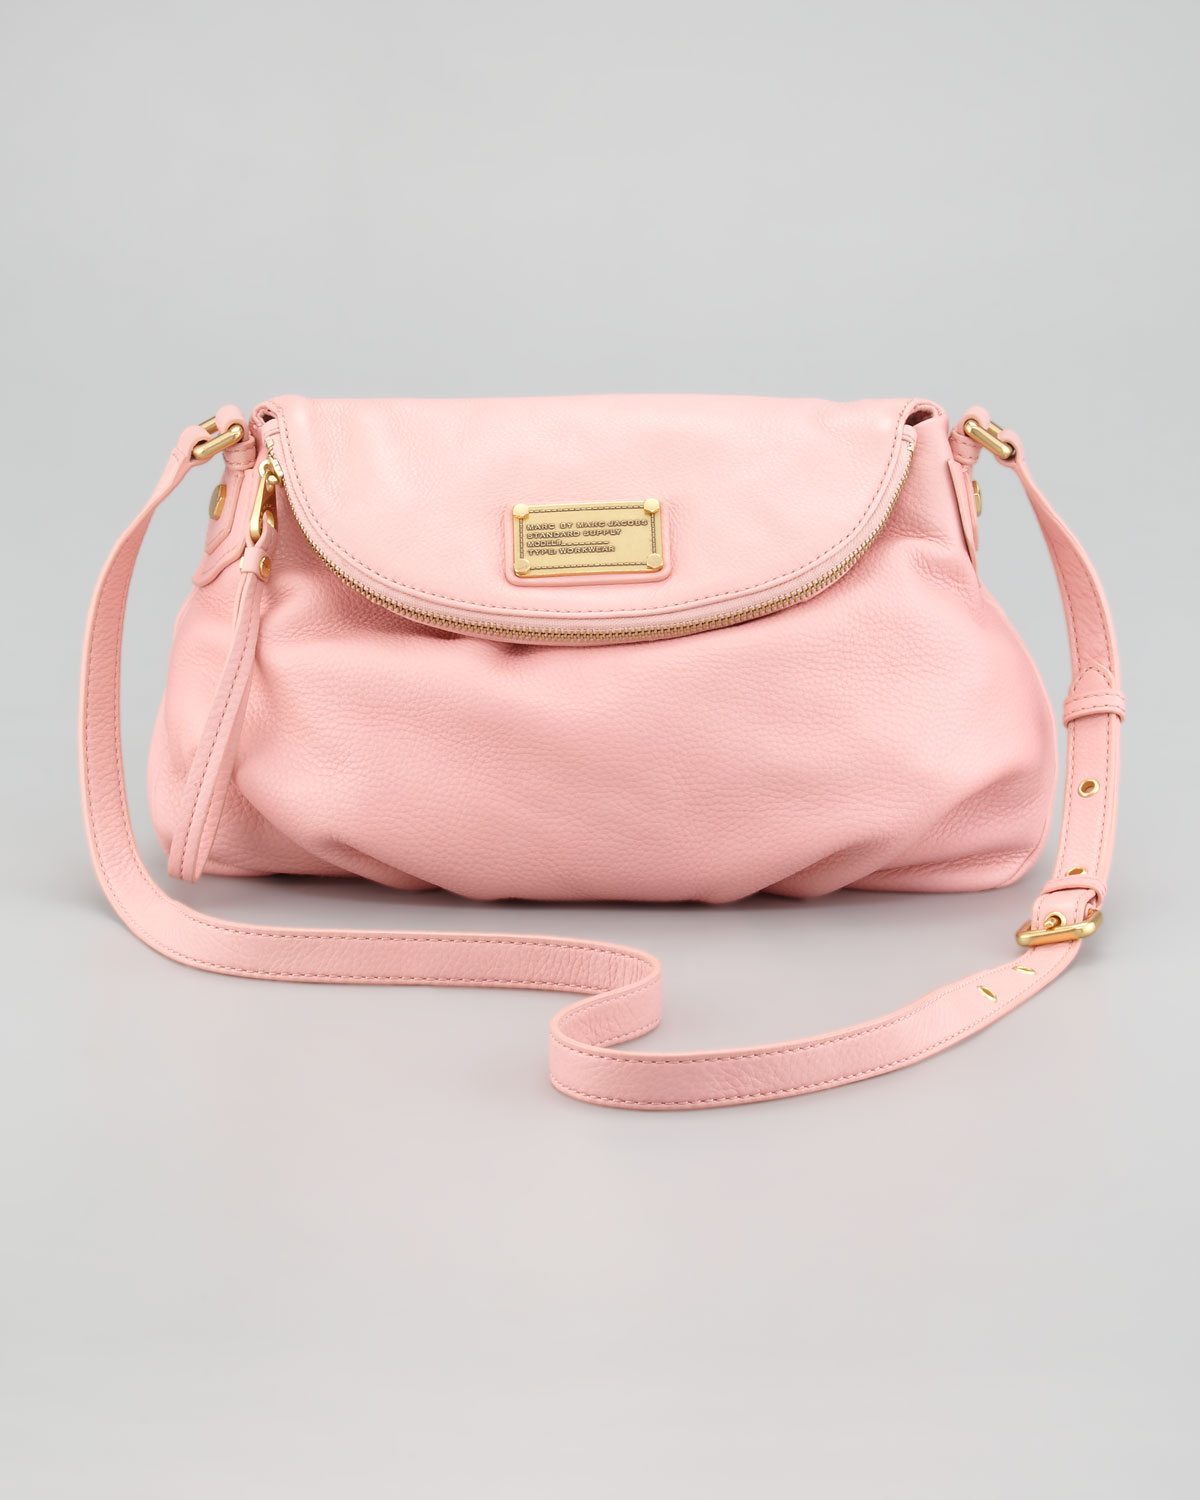 Lyst - Marc By Marc Jacobs Classic Q Natasha Crossbody Bag in Pink